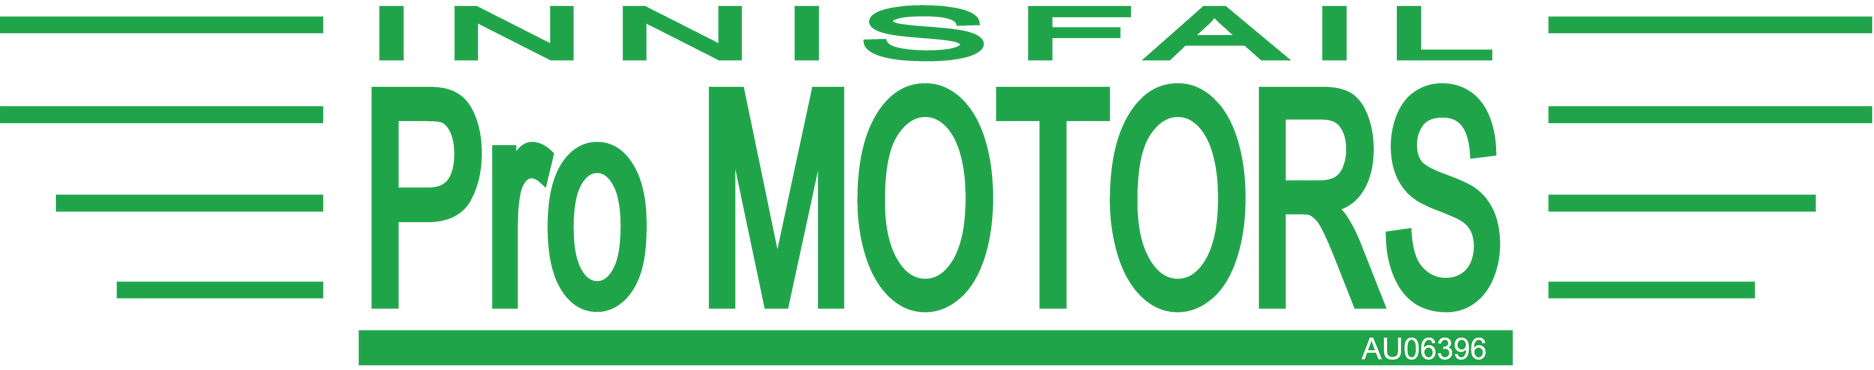 Innisfail Pro Motors: Motor Mechanics on the Cassowary Coast